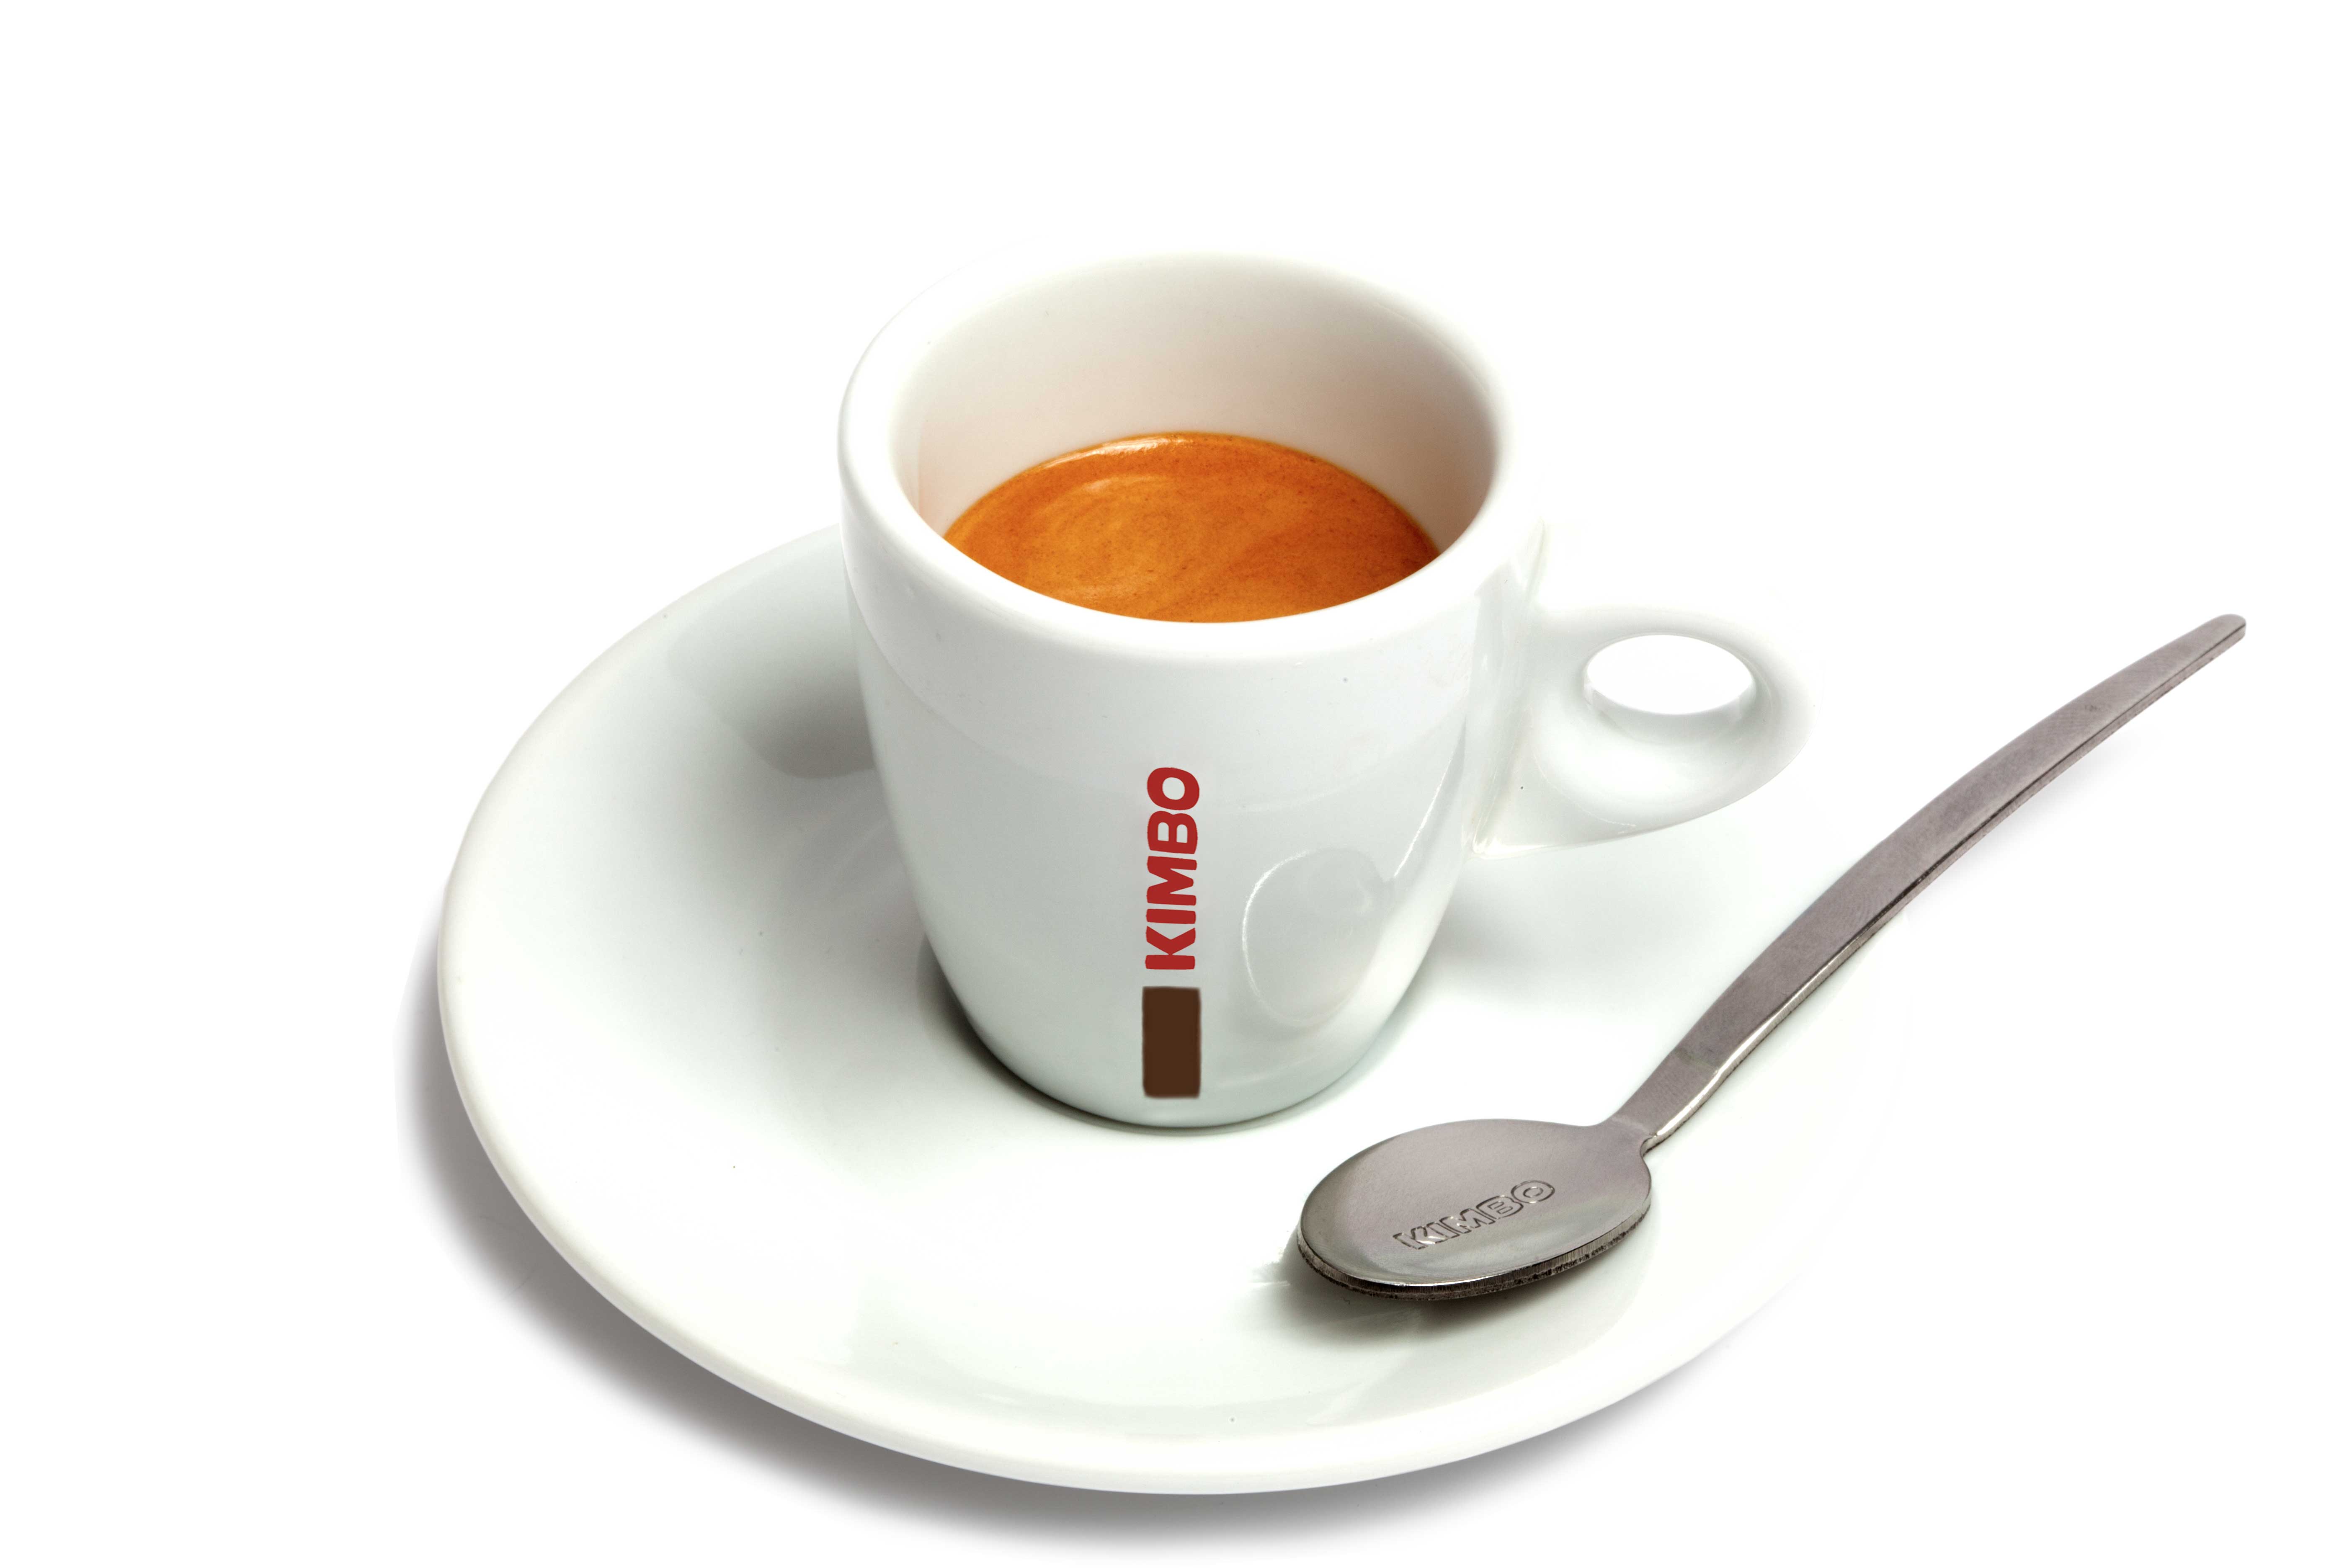 Kimbo, the excellent Italian art of espresso coffee